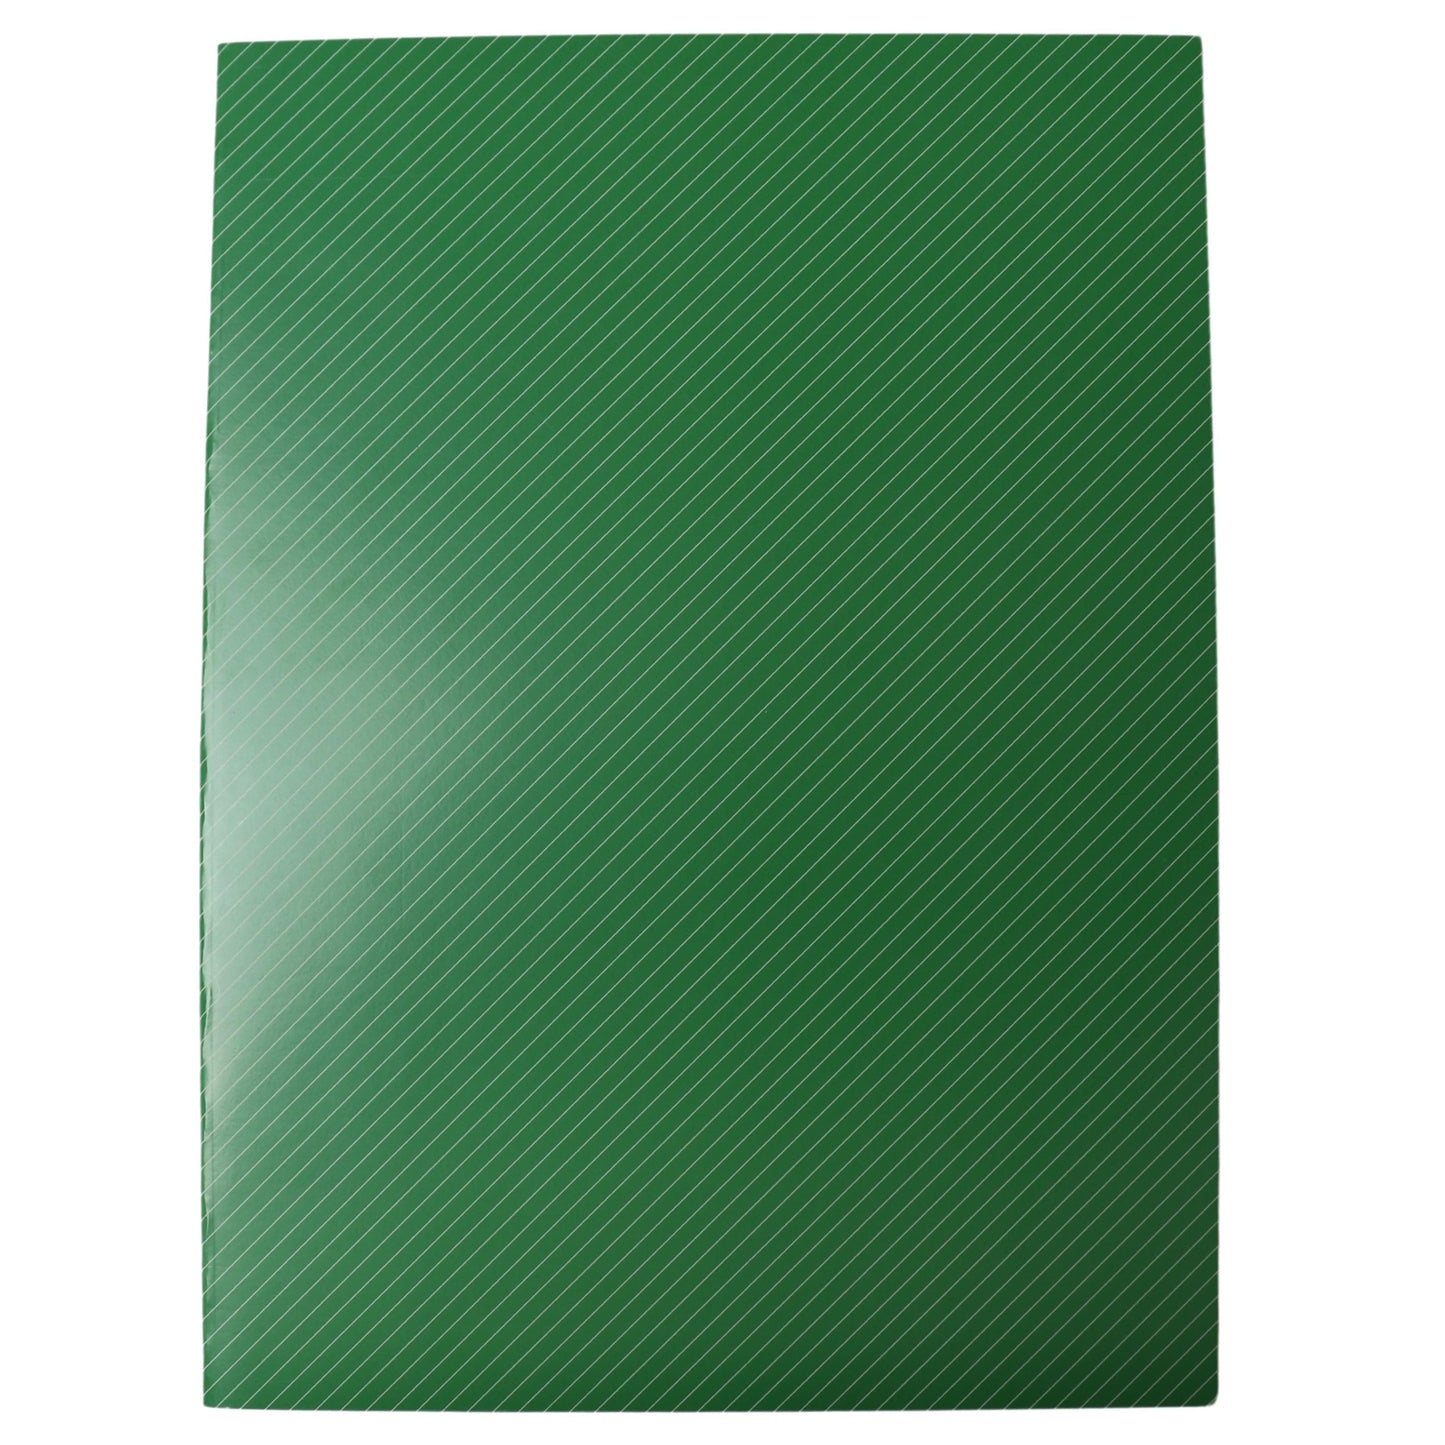 MATNI GROUP School Bags & Supplies Green MATNI GROUP -  University CopyBook 48 Sheets